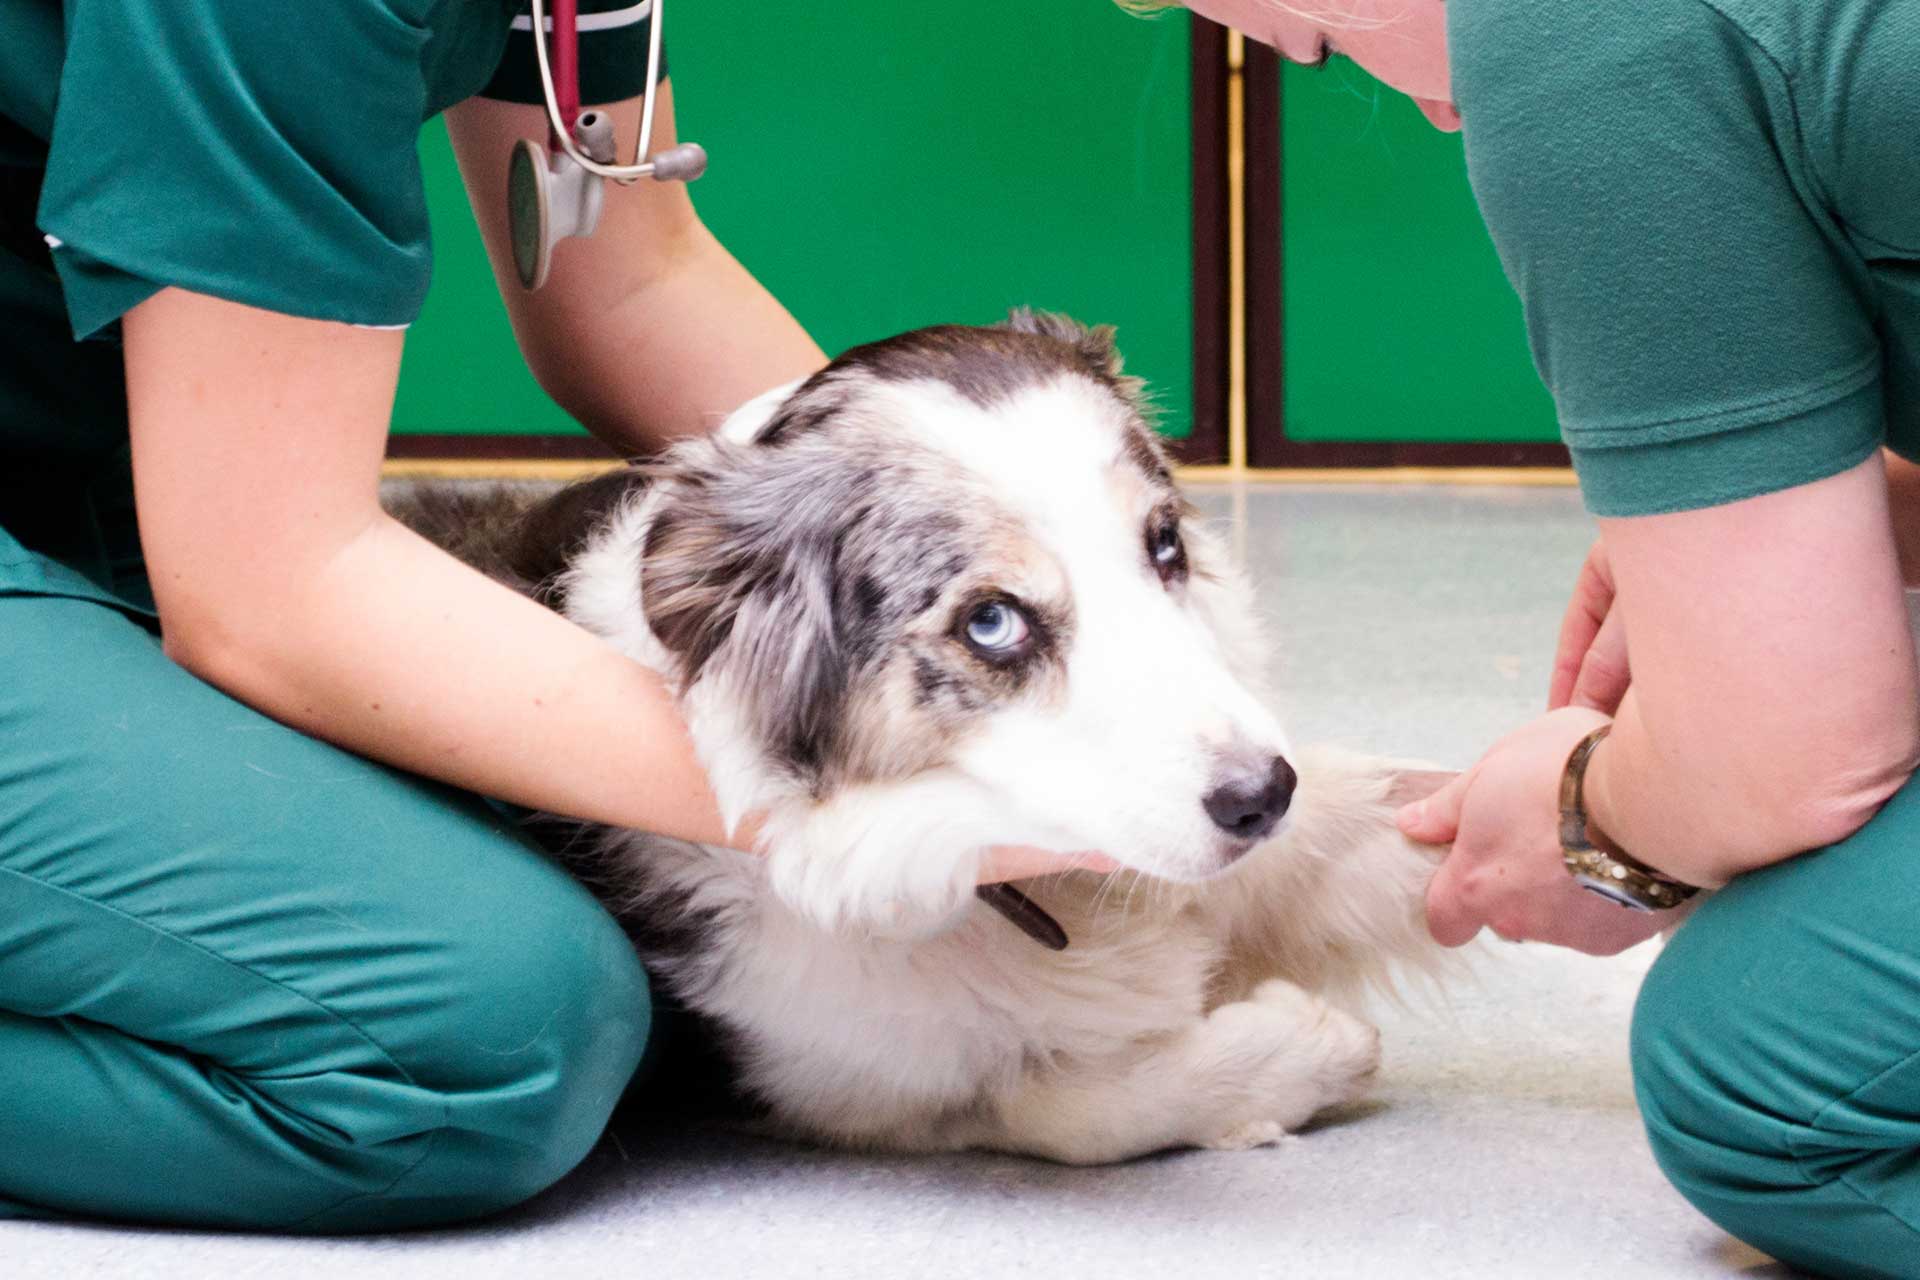 Dog in emergency room